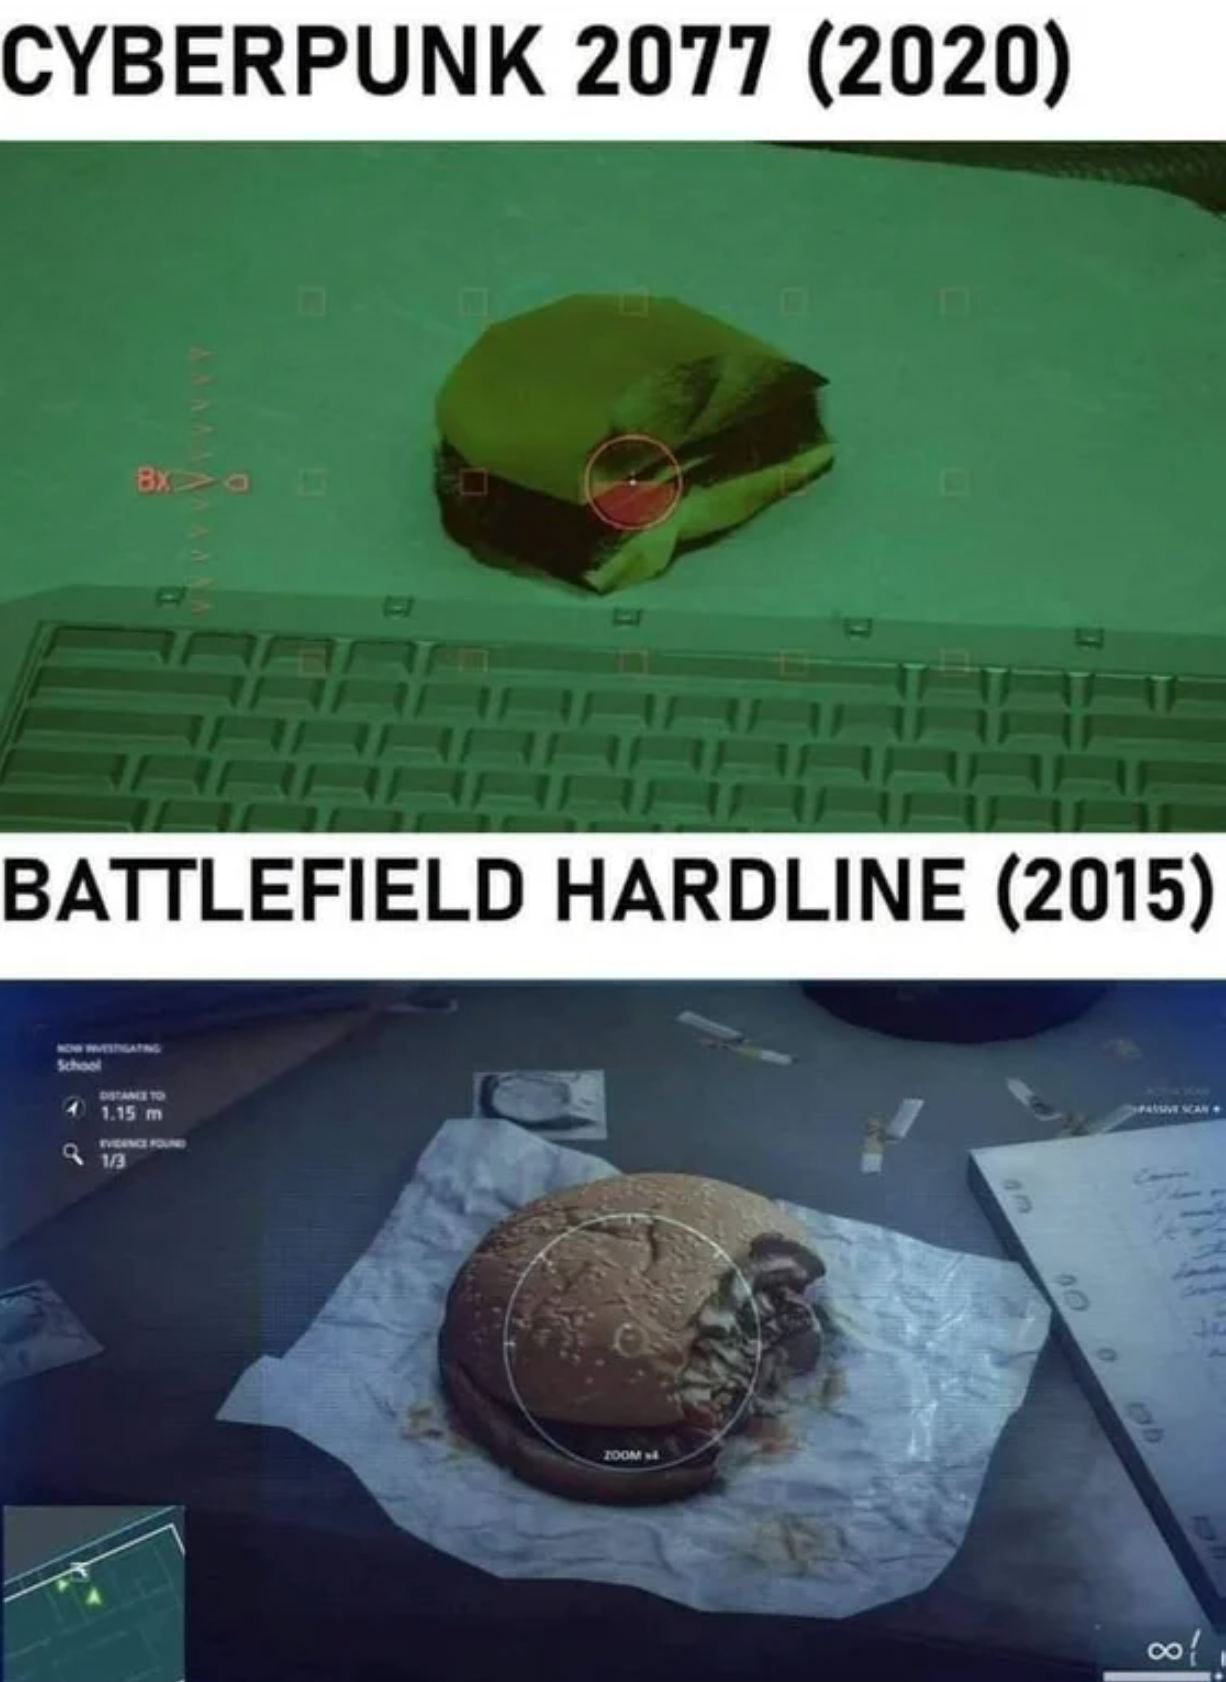 funny gaming memes - battlefield hardline burger vs cyberpunk - Cyberpunk 2077 2020 Battlefield Hardline 2015